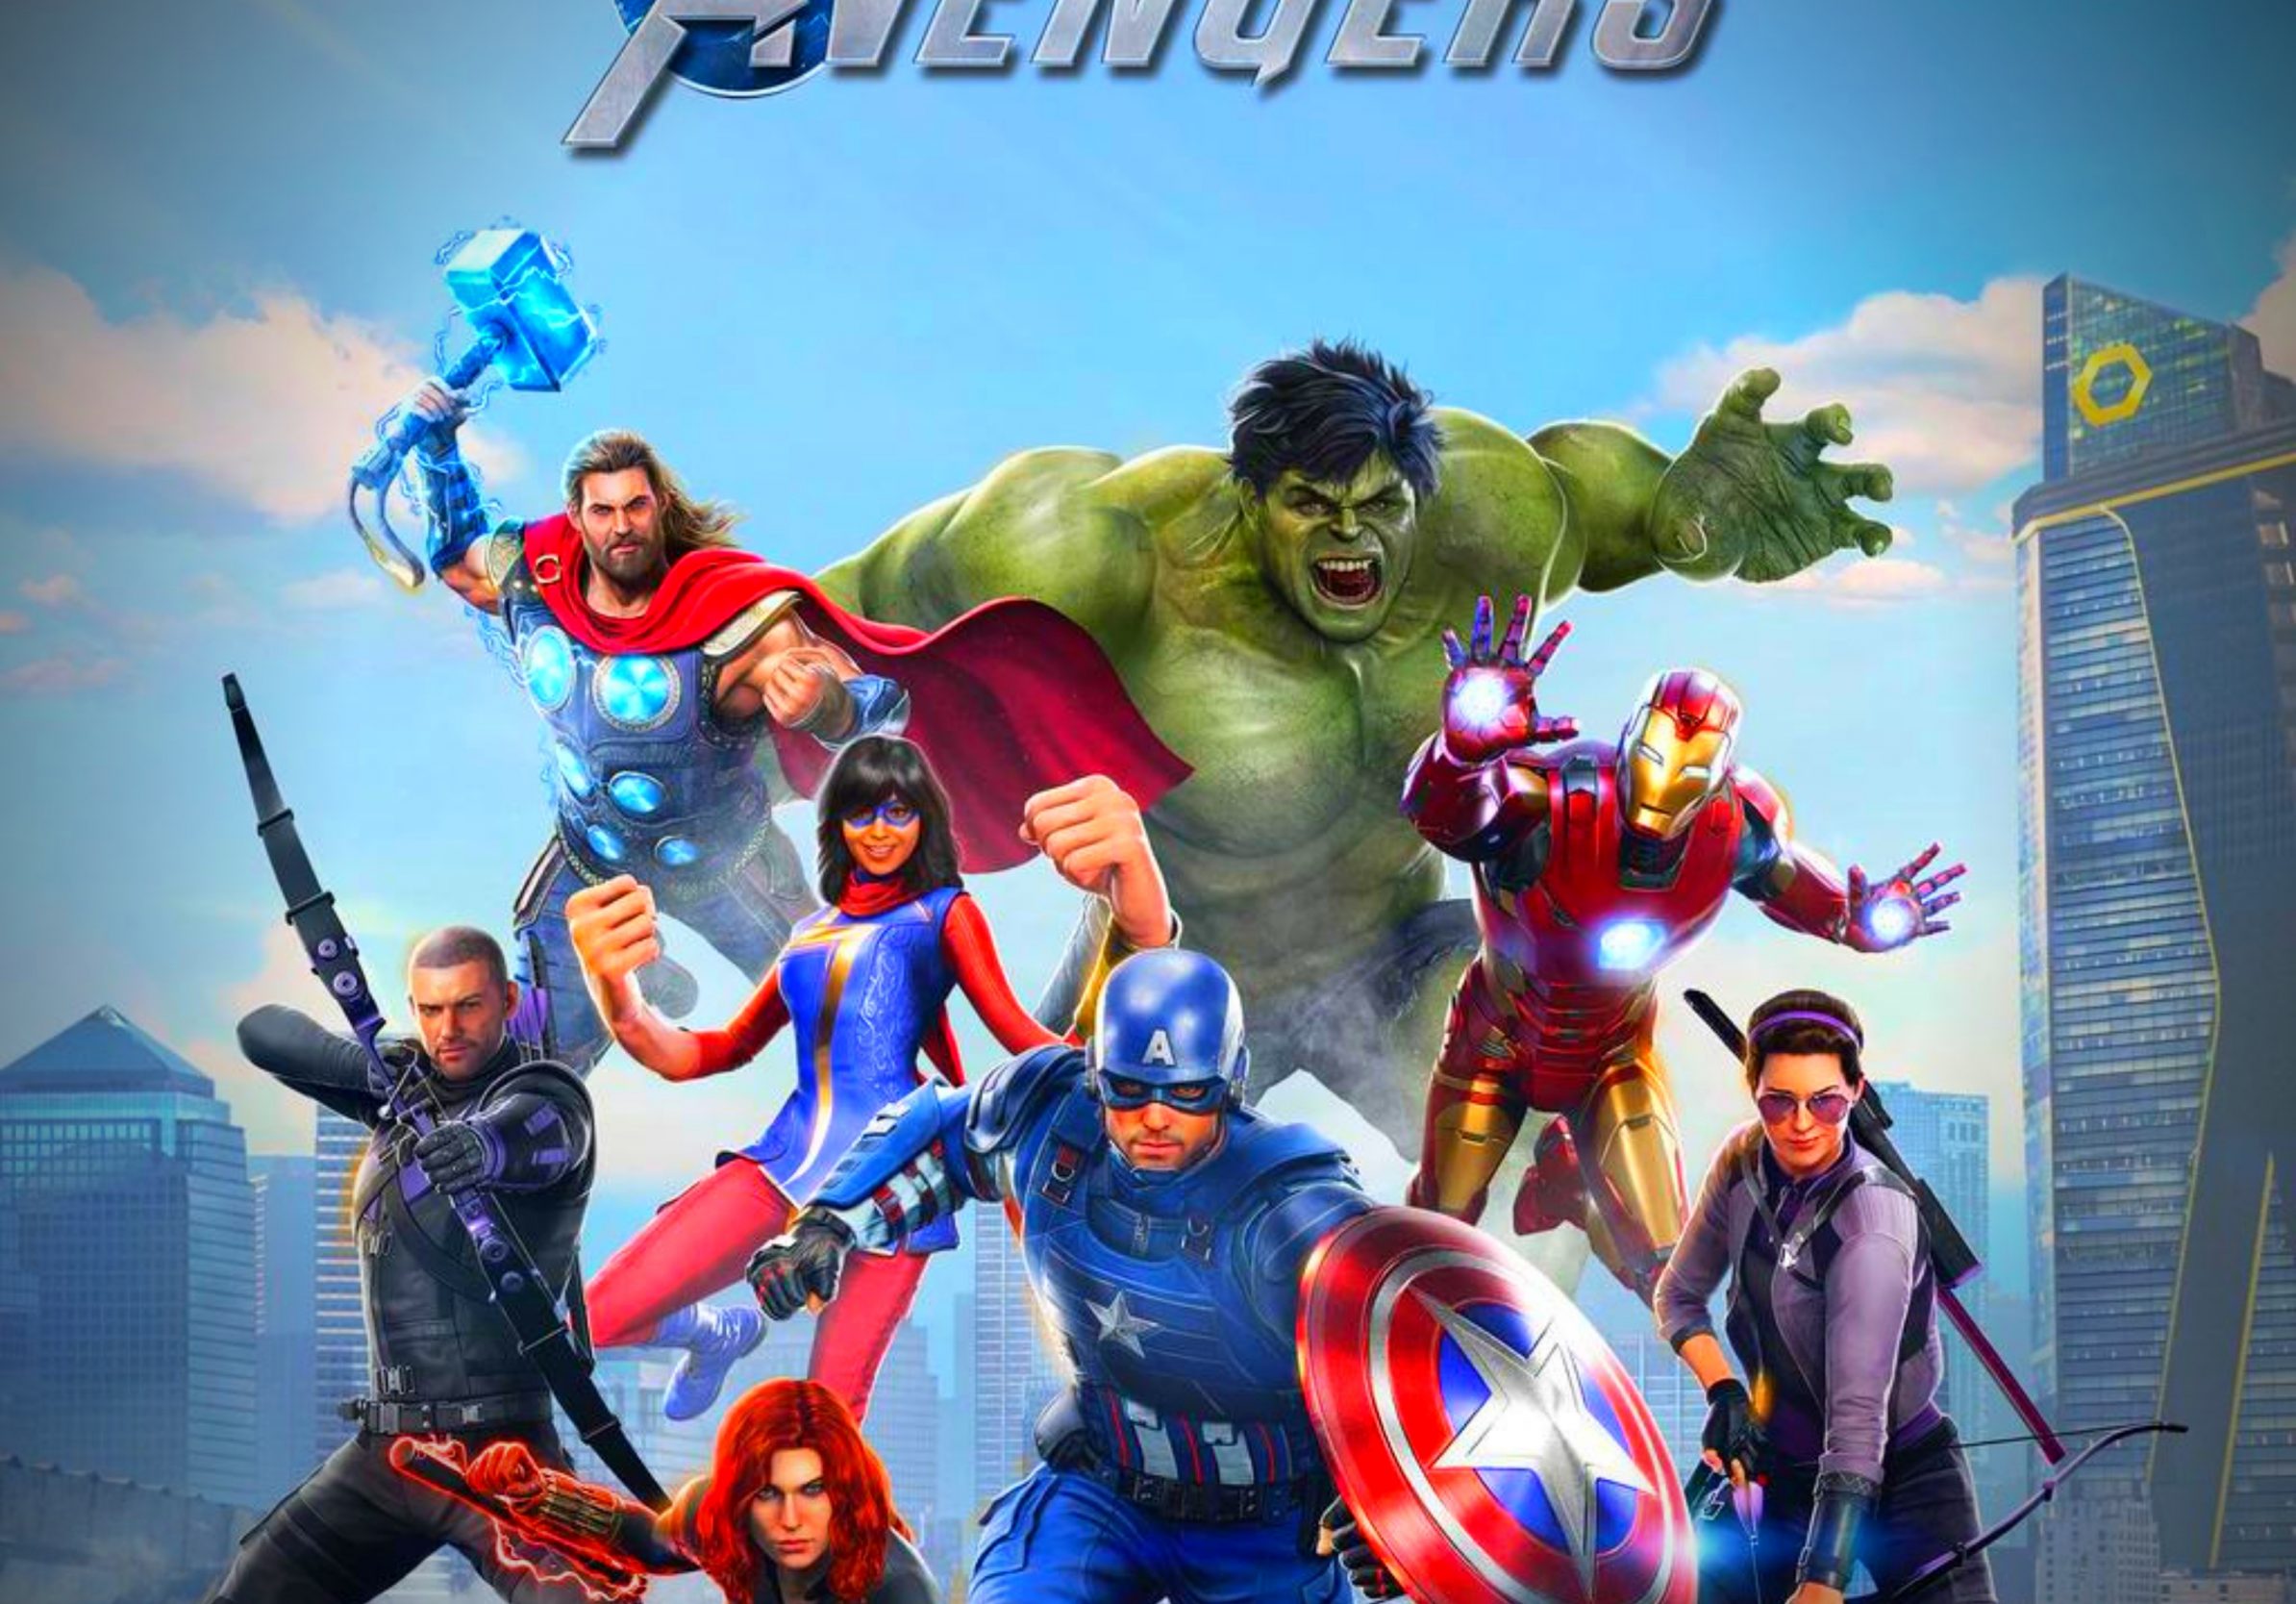 2388x1668 iPad Pro wallpapers Marvel Avengers iPad Wallpaper 2388x1668 pixels resolution